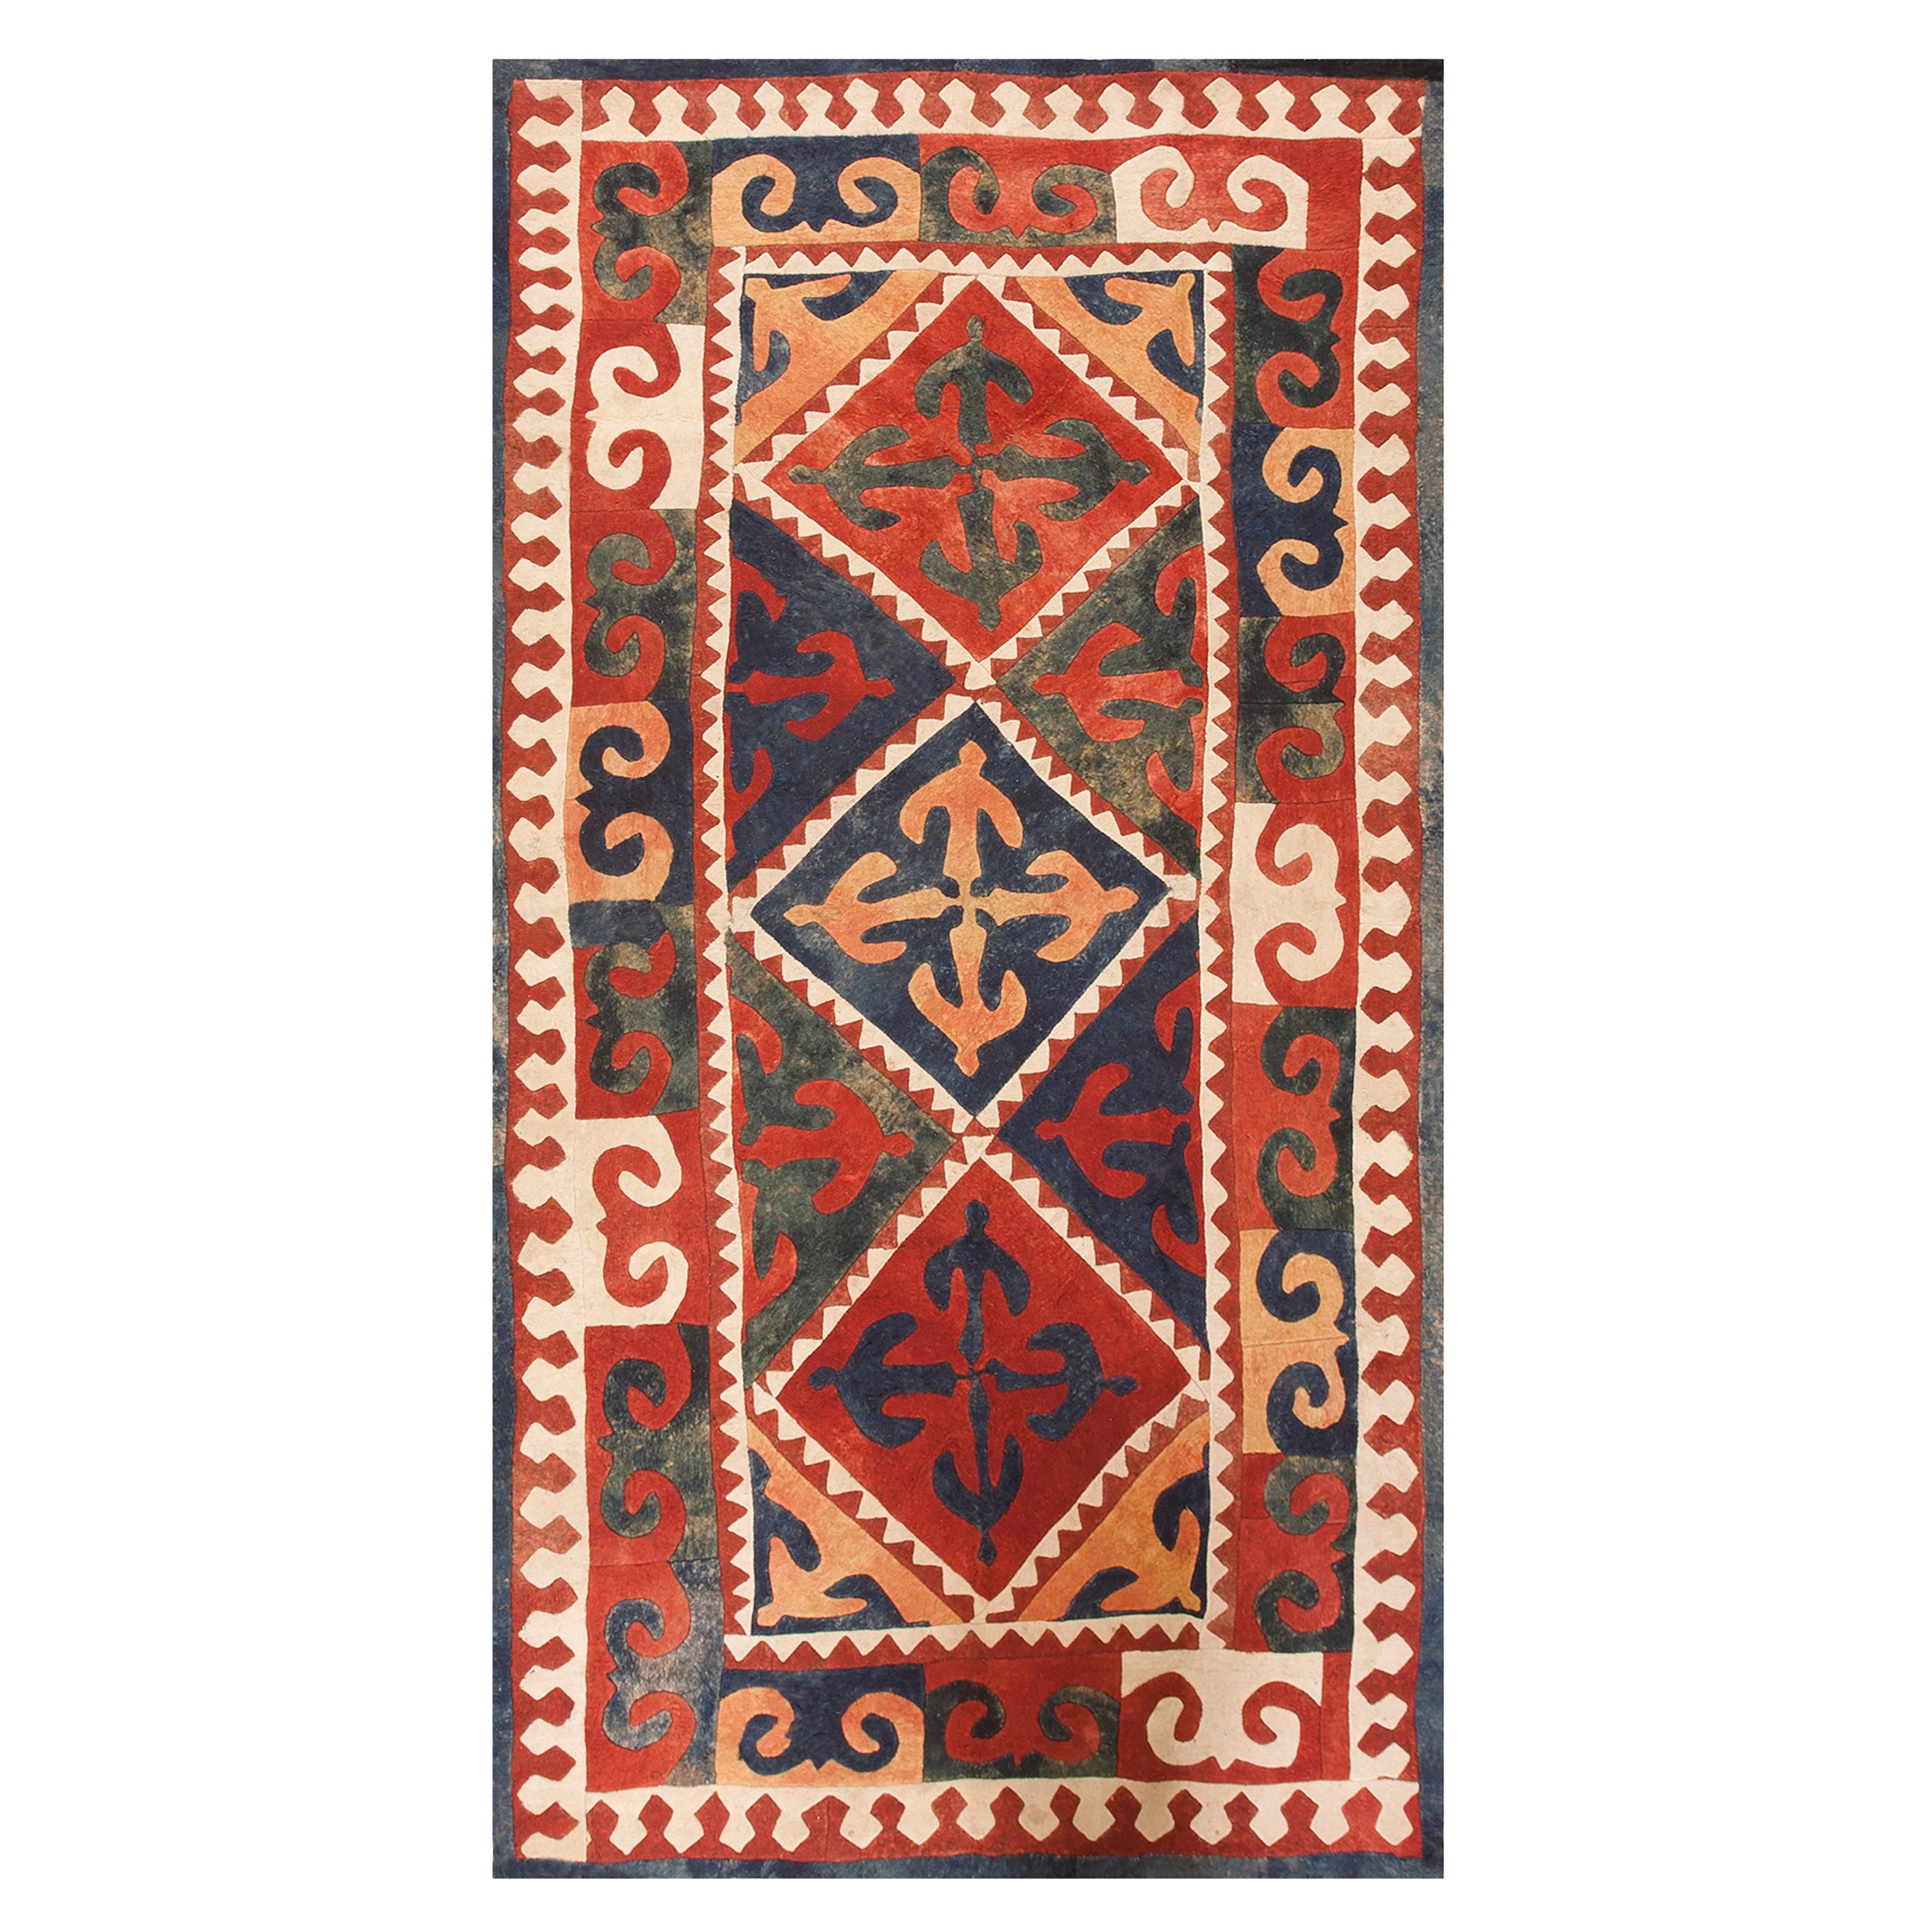 Late 19th Century Kirghiz Felt Shyrdak Carpet ( 6' x 12' - 188 x 365 ) For Sale